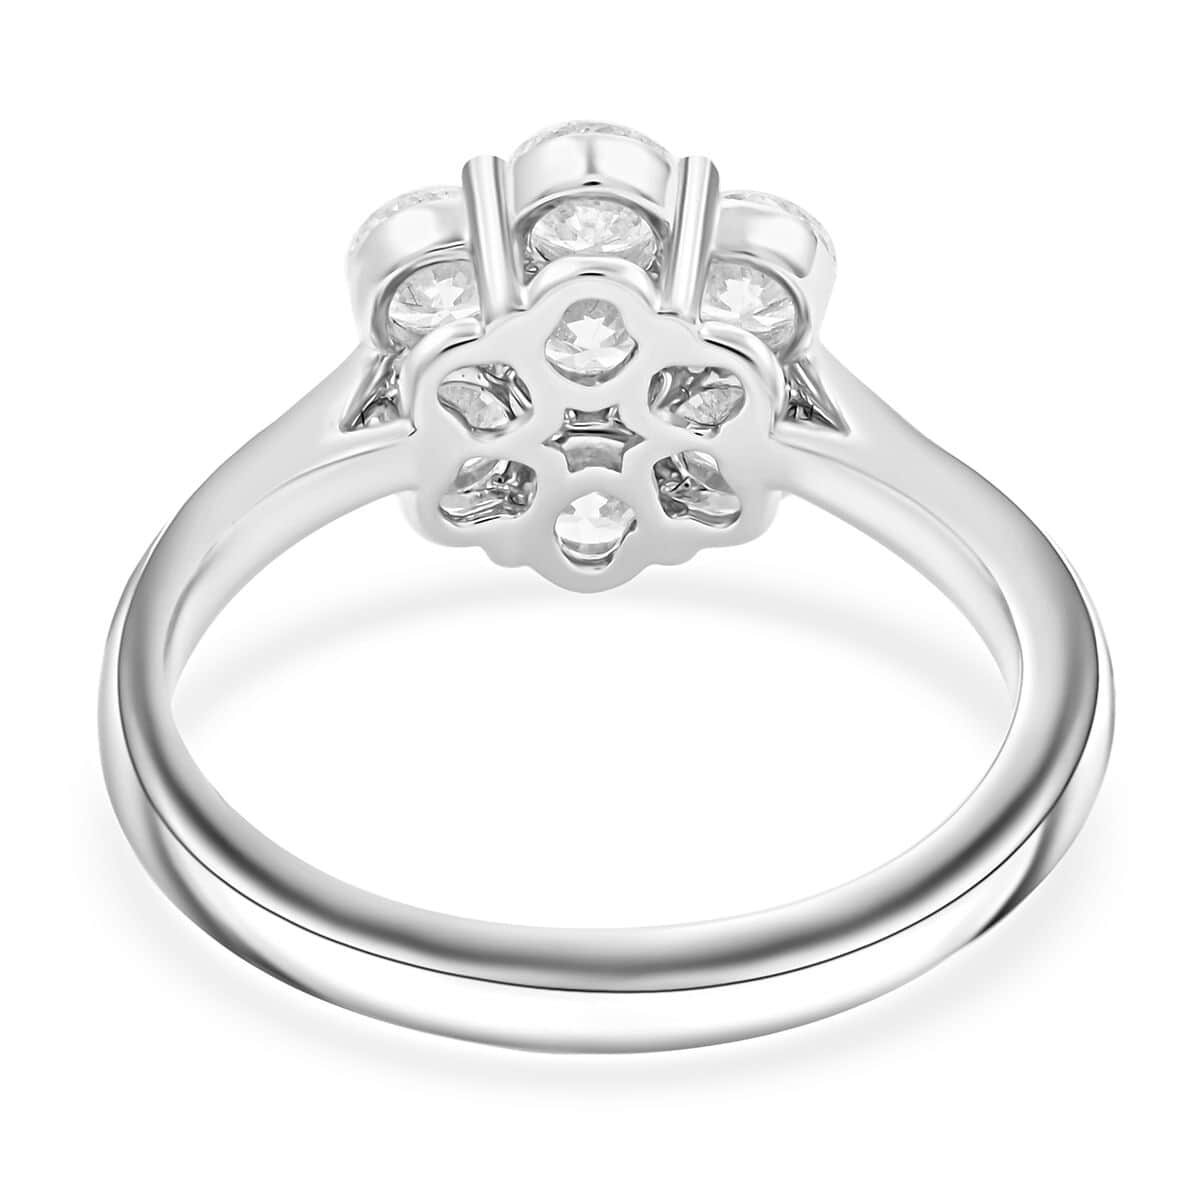 Modani 18K White Gold White Diamond Ring (Size 7.0) 4.35 Grams 1.70 ctw image number 4